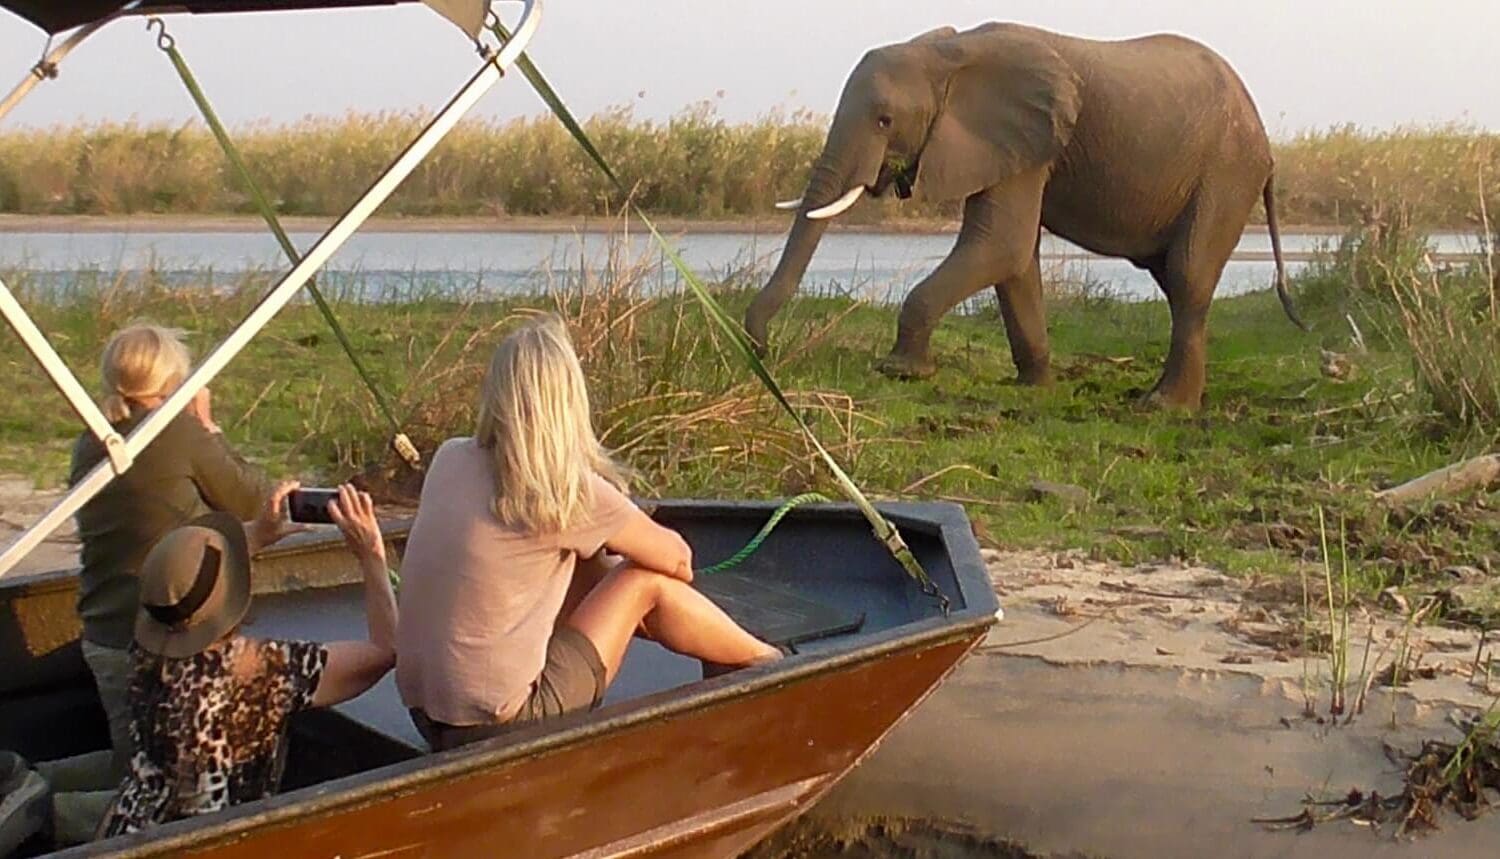 boat and elephant zambia